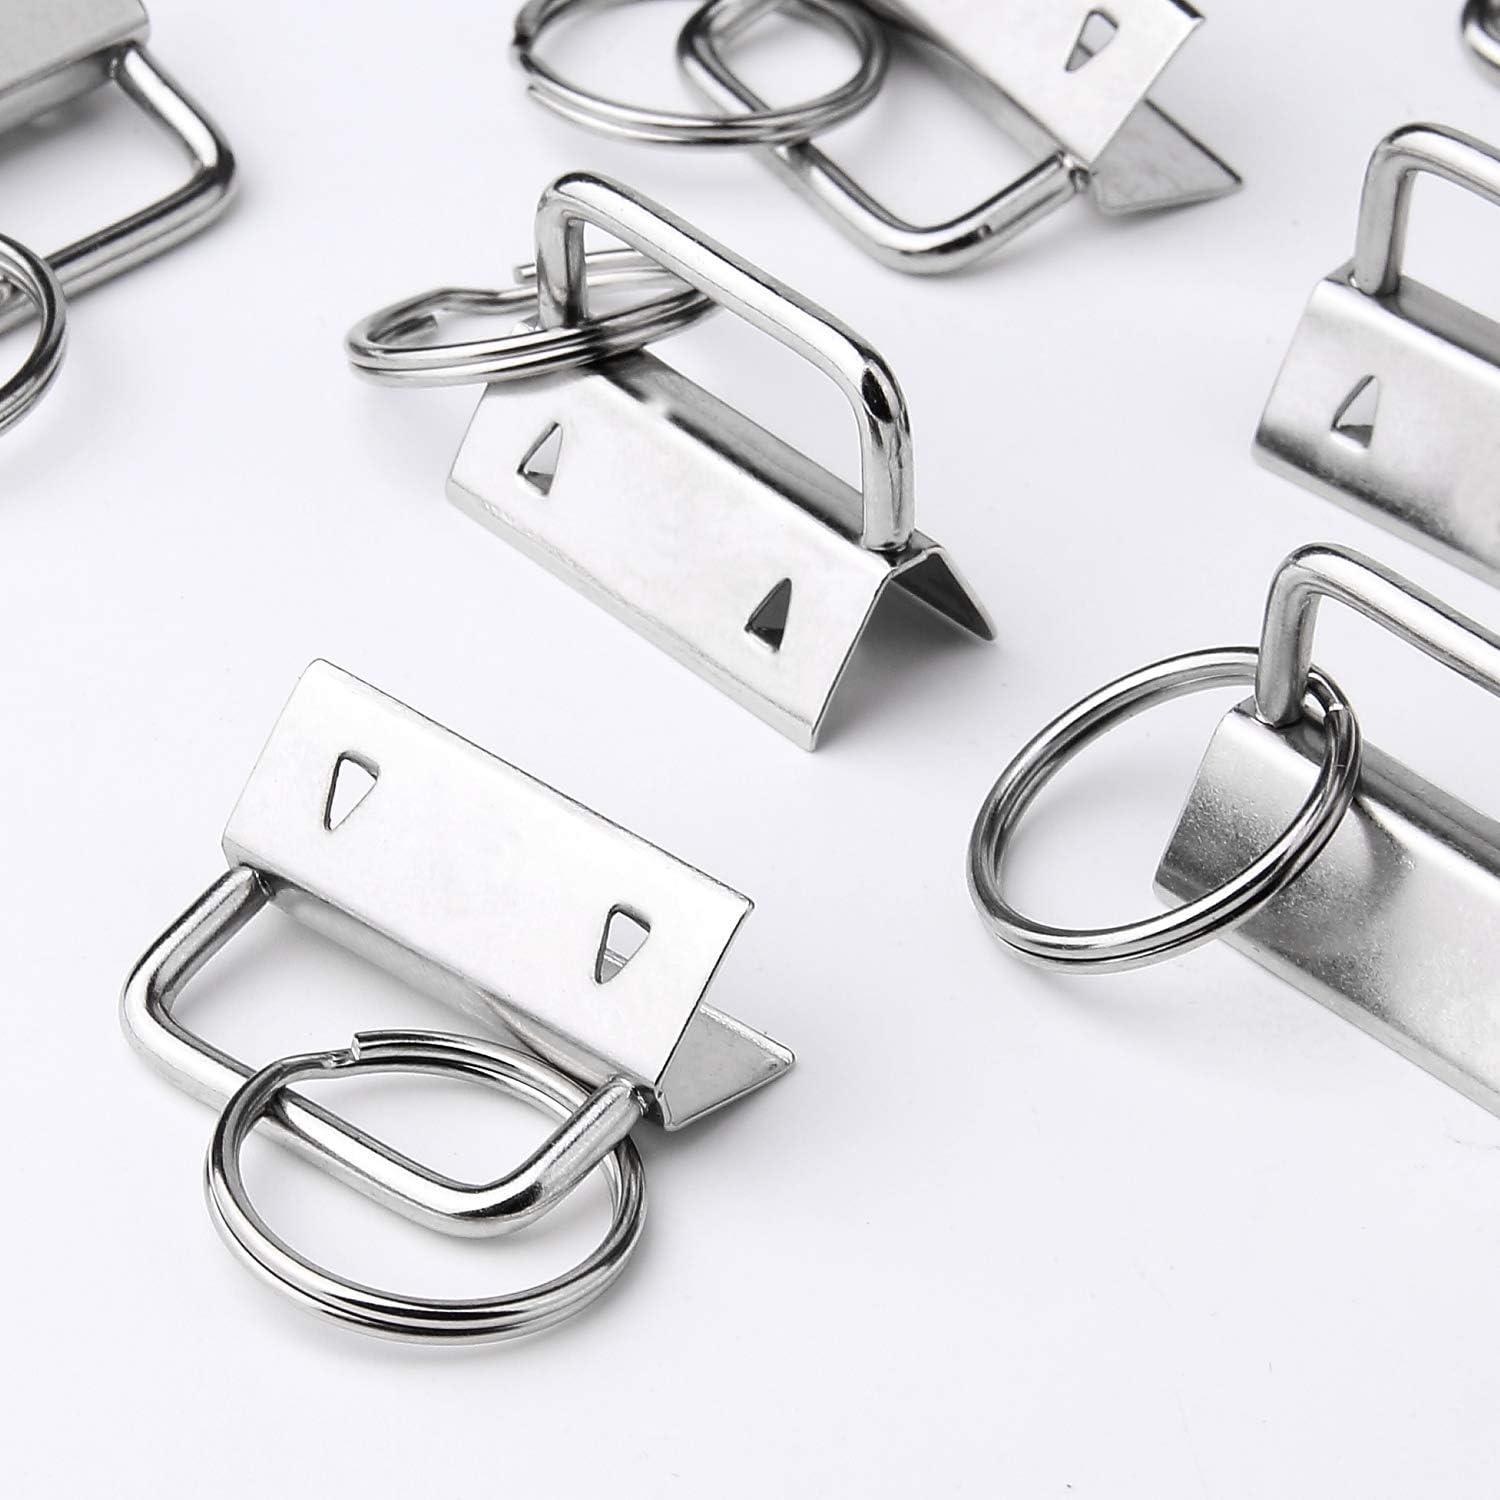 100 Sets - 1.25 (1.25 INCH) - Key Fob Hardware/Key Chain/Wristlet Sets  with Split Rings/Key Rings